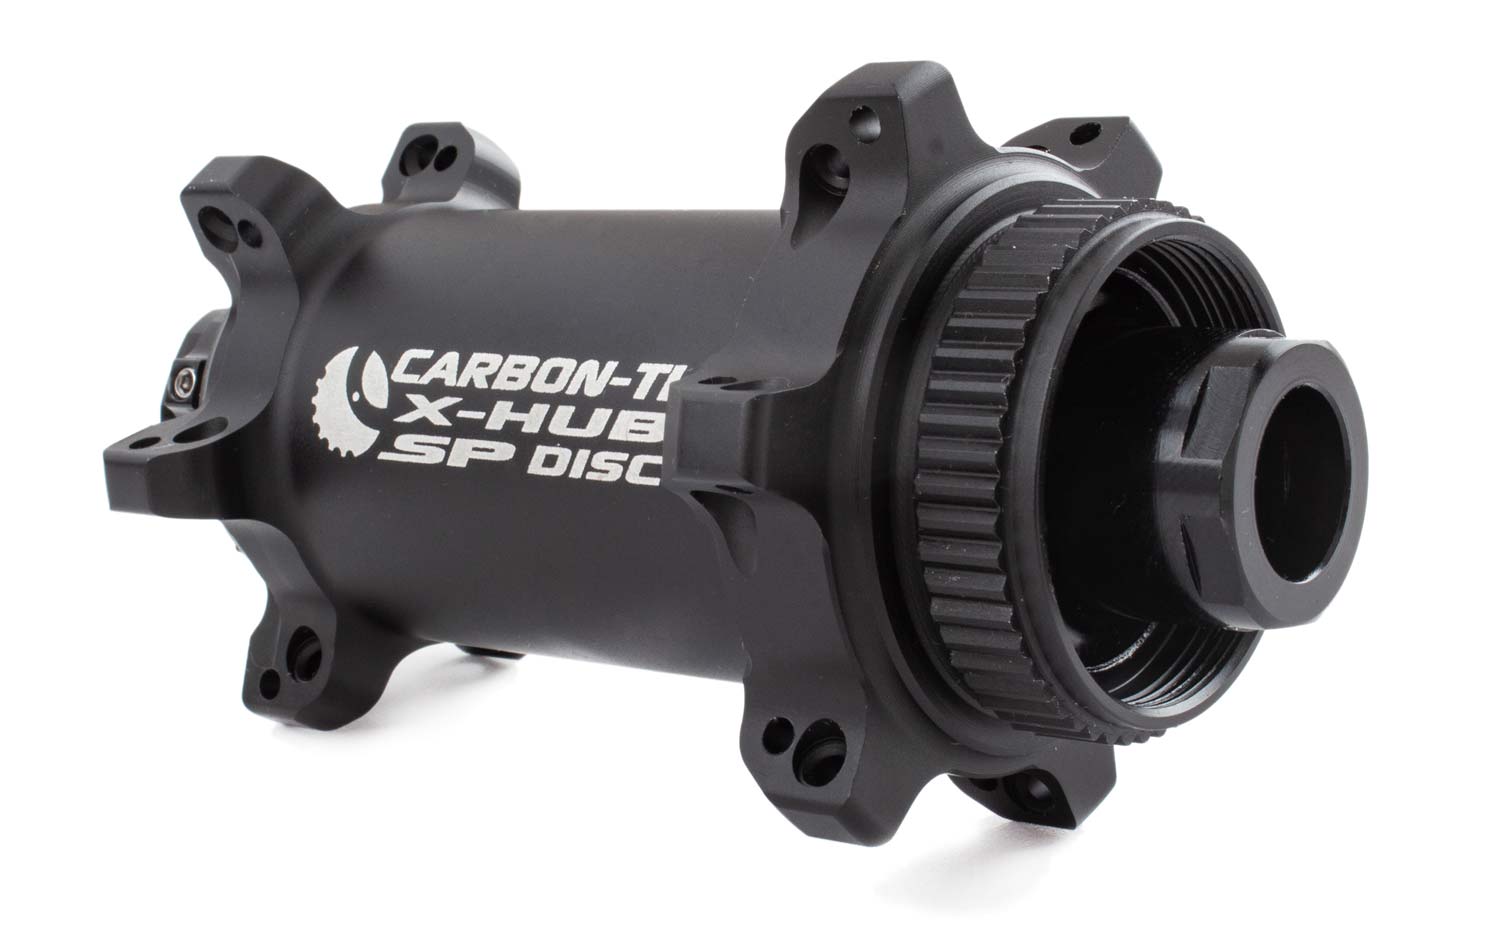 Carbon-Ti X-Hub SP lightweight centerlock disc road hubs